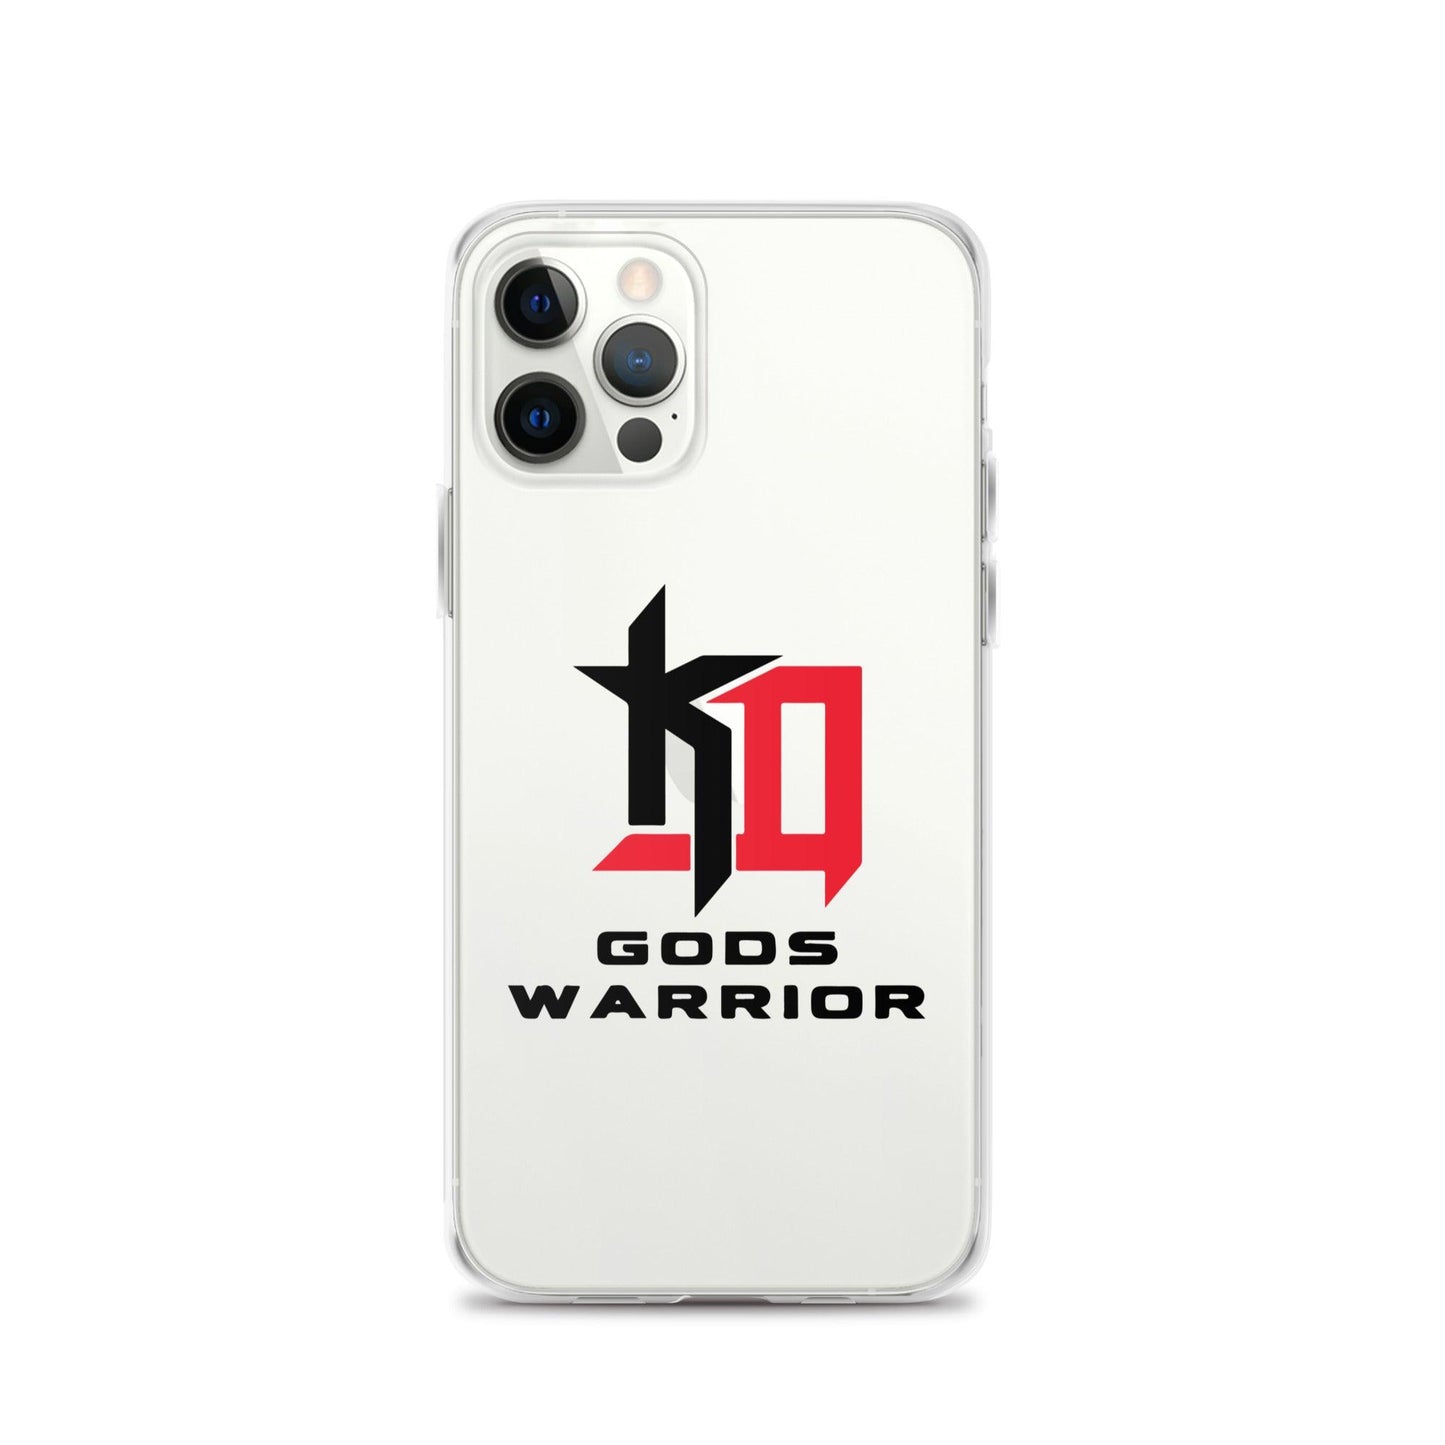 Kailon Davis "God's Warrior" iPhone Case - Fan Arch